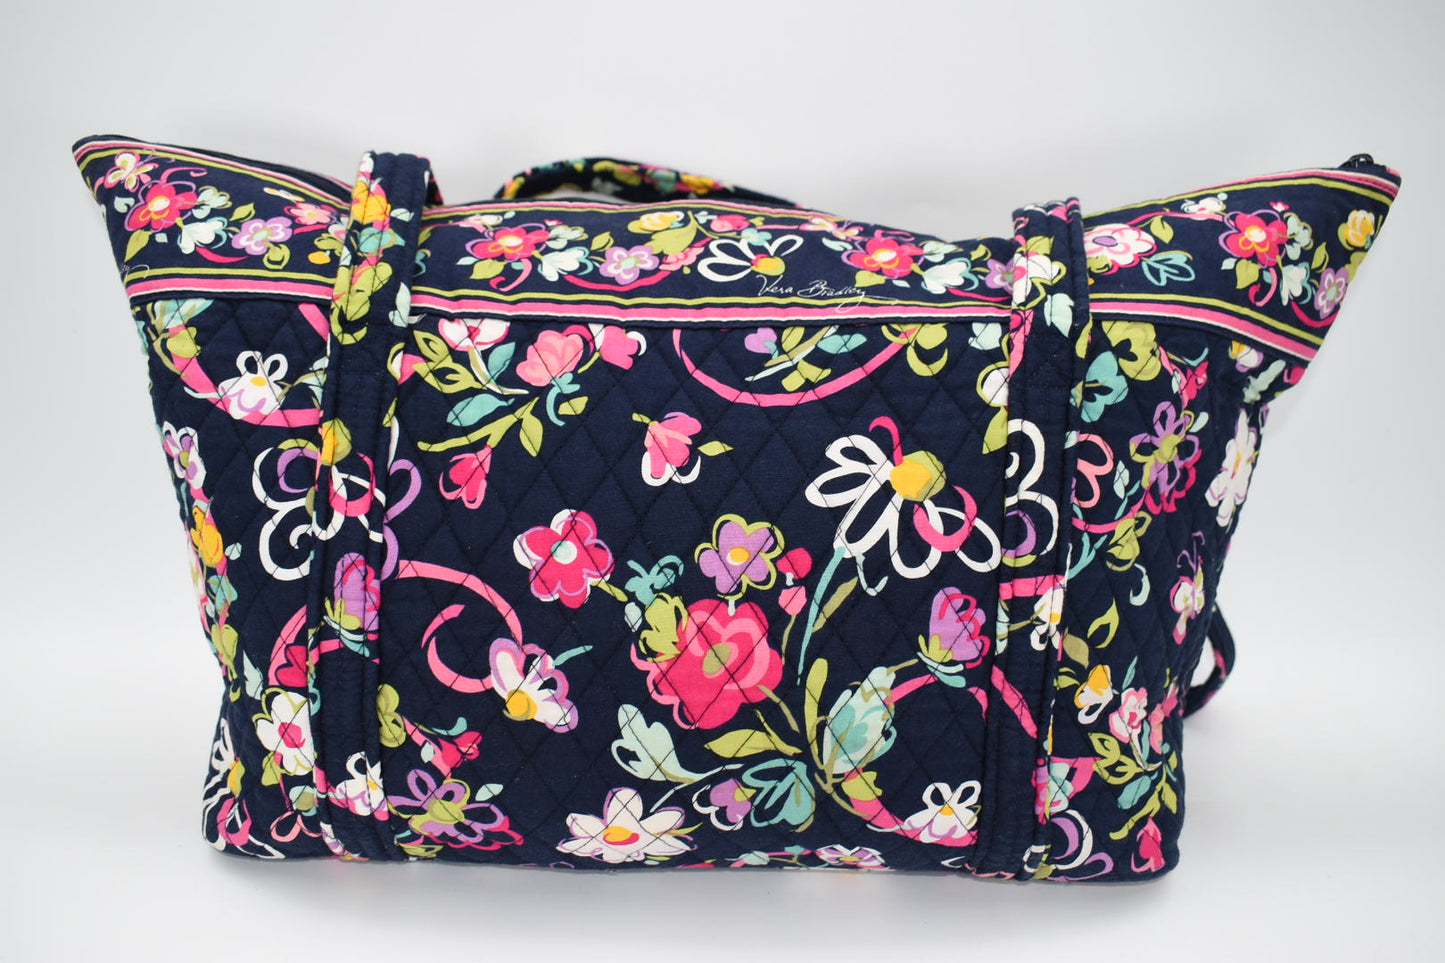 Vera Bradley Large Miller Travel Tote Bag in Petal Paisley Pattern